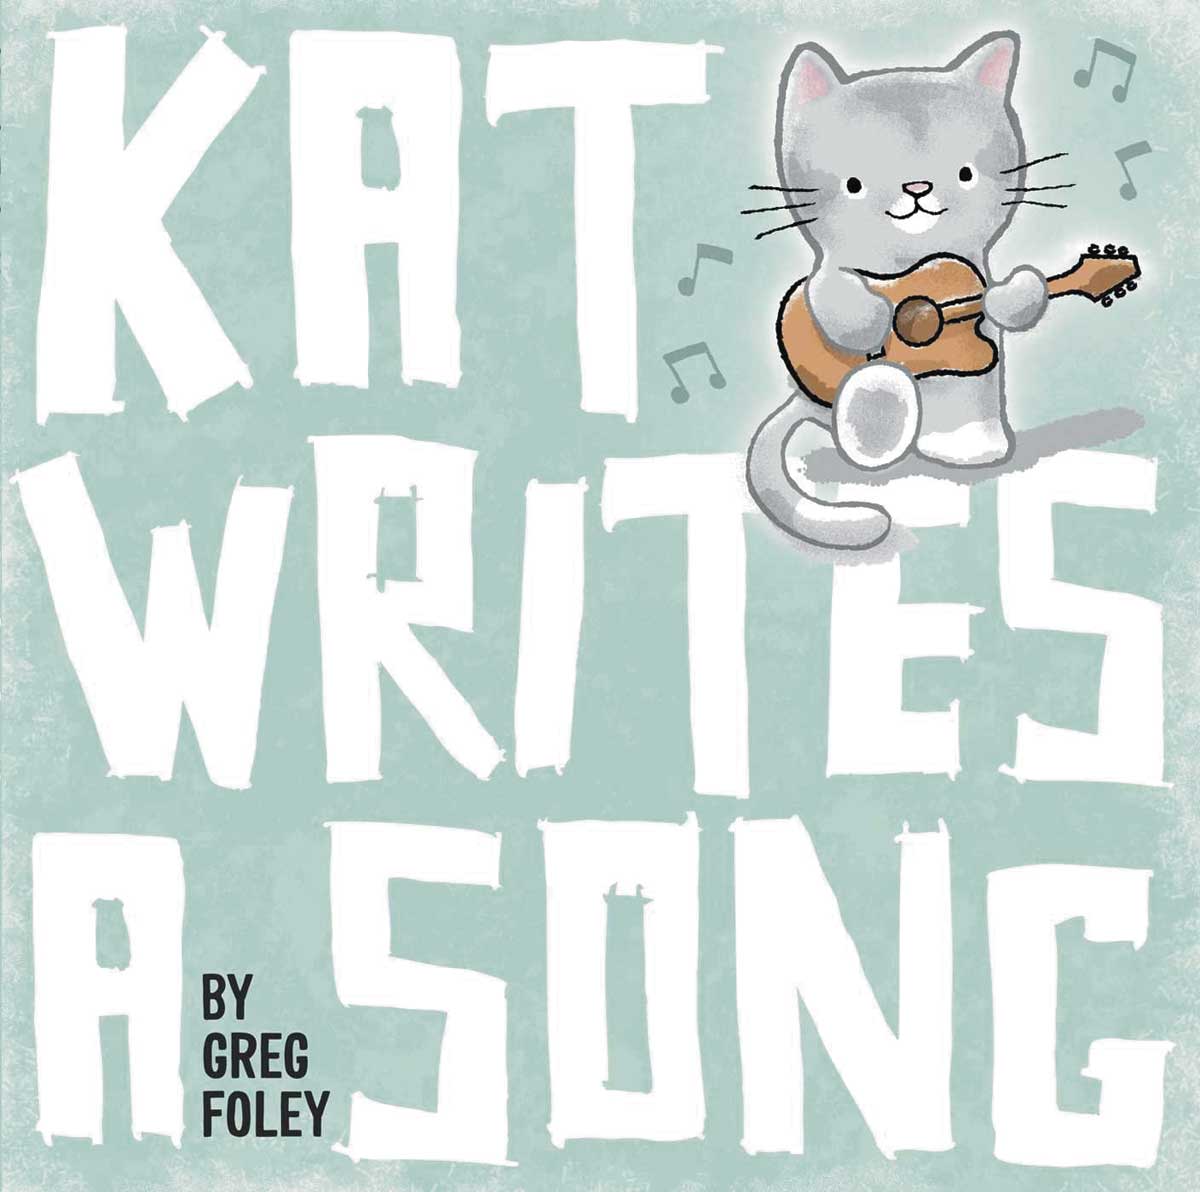 Purr-fect story: Kat ponders music’s power